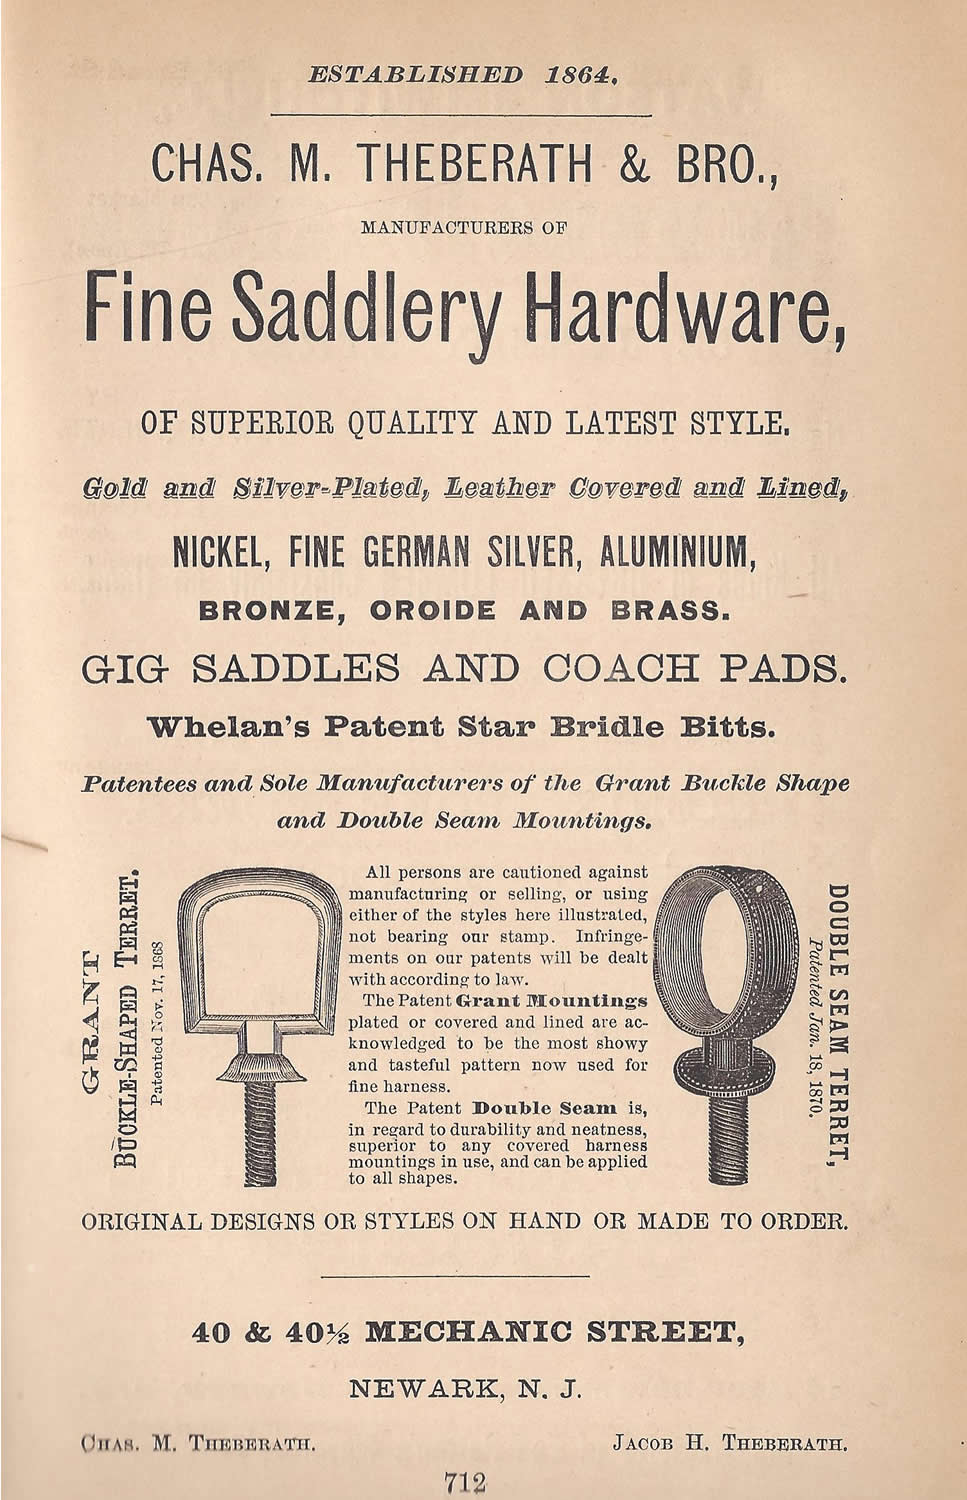 Chas. M. Theberath & Bro - Fine Saddlery Hardware
